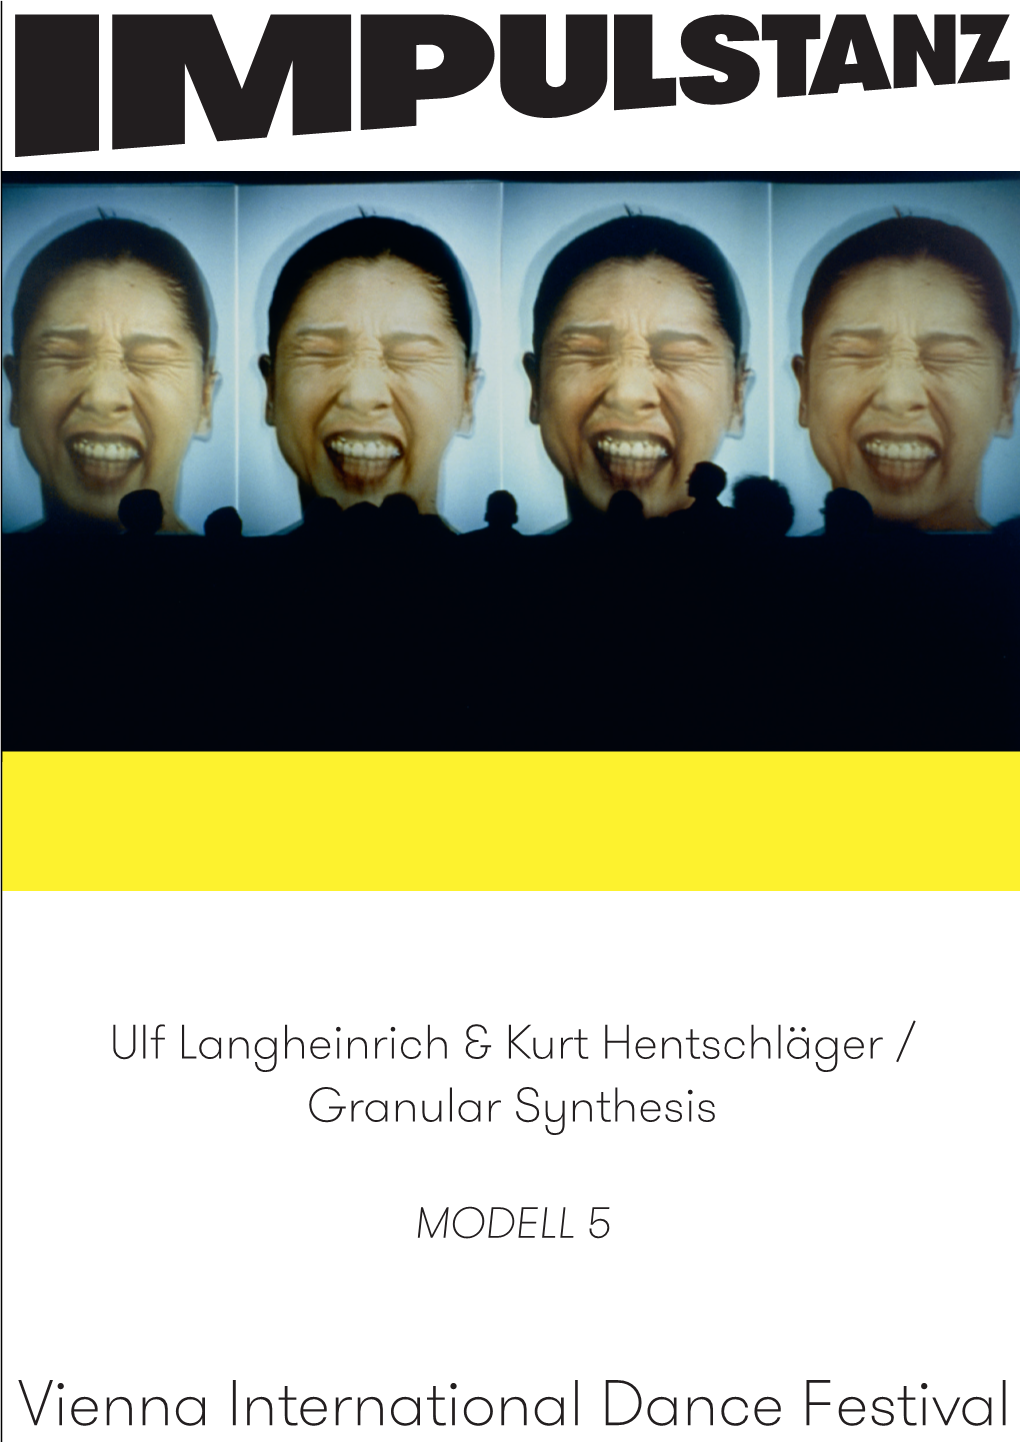 Ulf Langheinrich & Kurt Hentschläger / Granular Synthesis